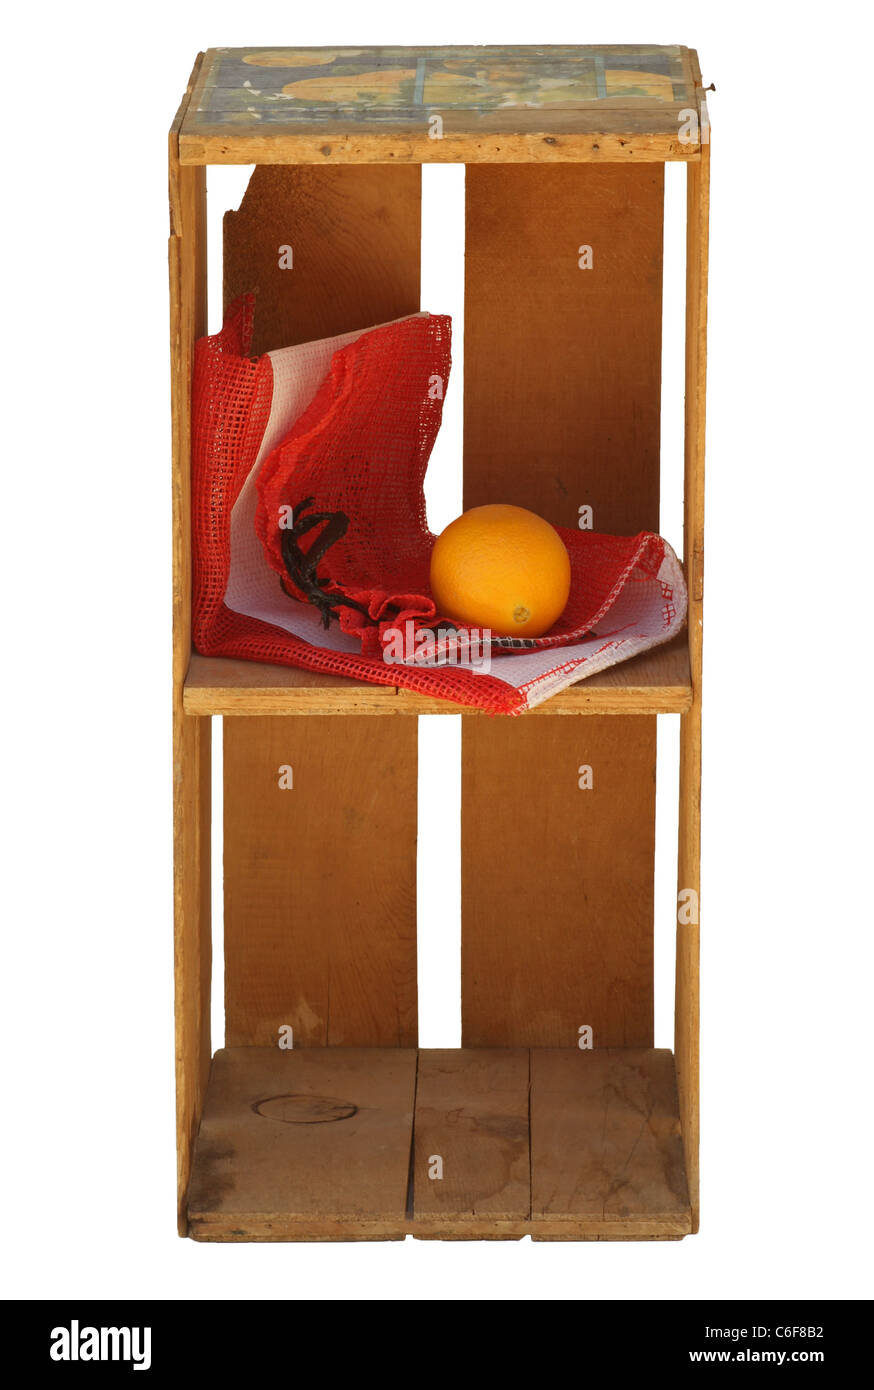 Upright wood crate isolated with net fruit  bag and orange fruit inside. Isolated. Stock Photo